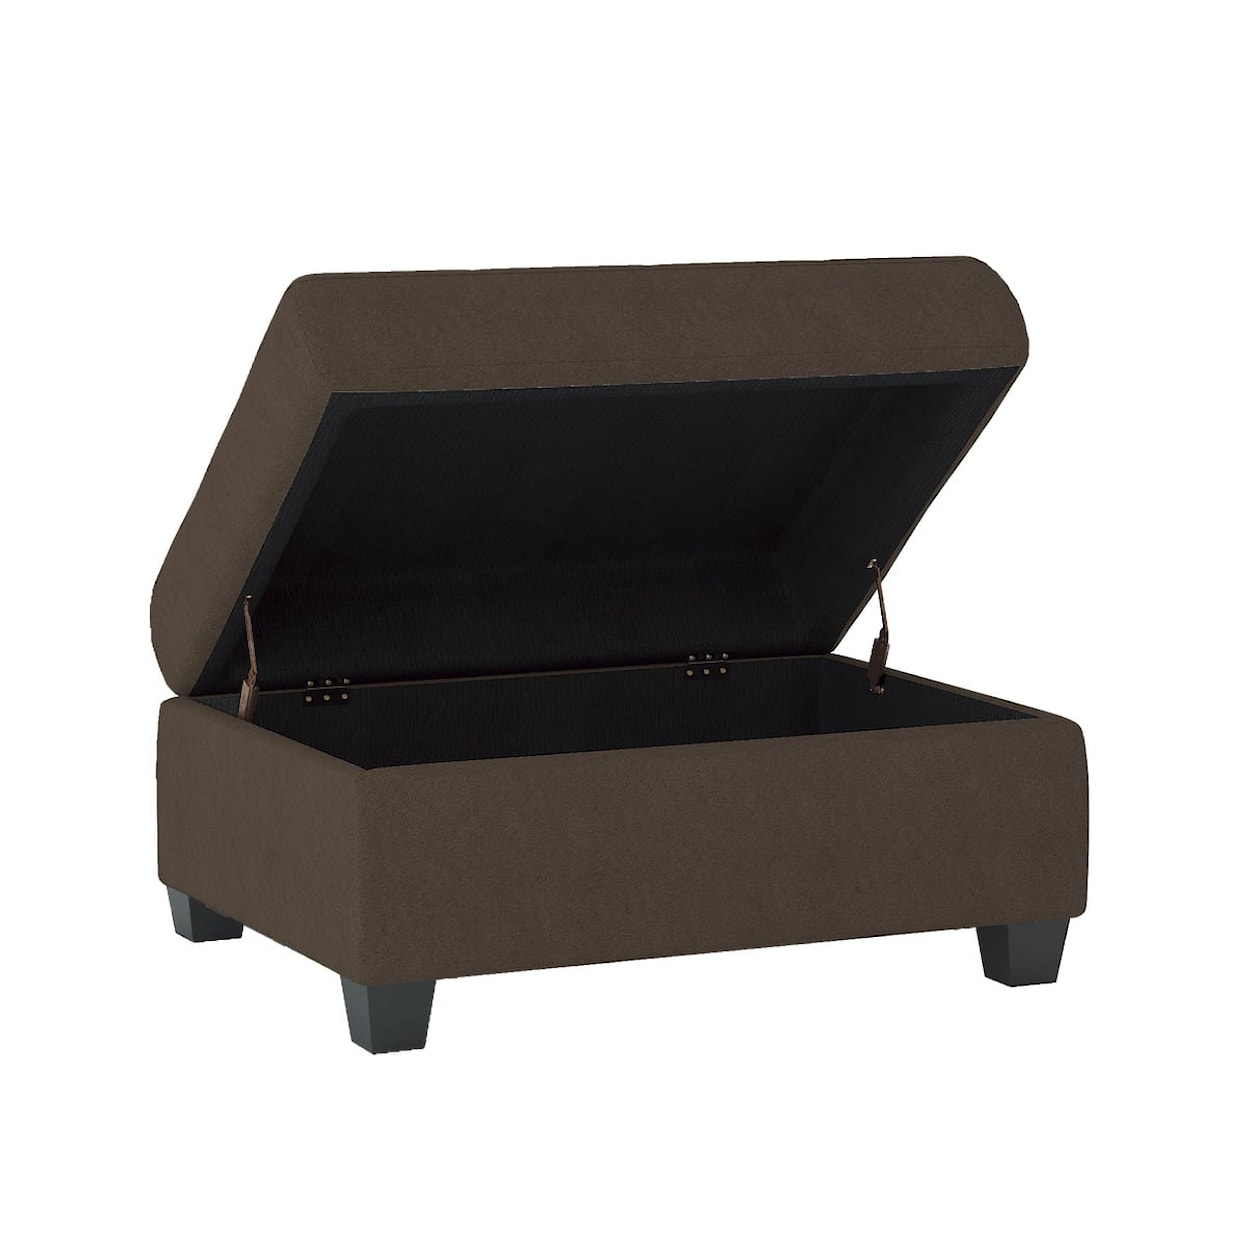 Homelegance Furniture Maston 2-Piece Reversible Sectional Sofa